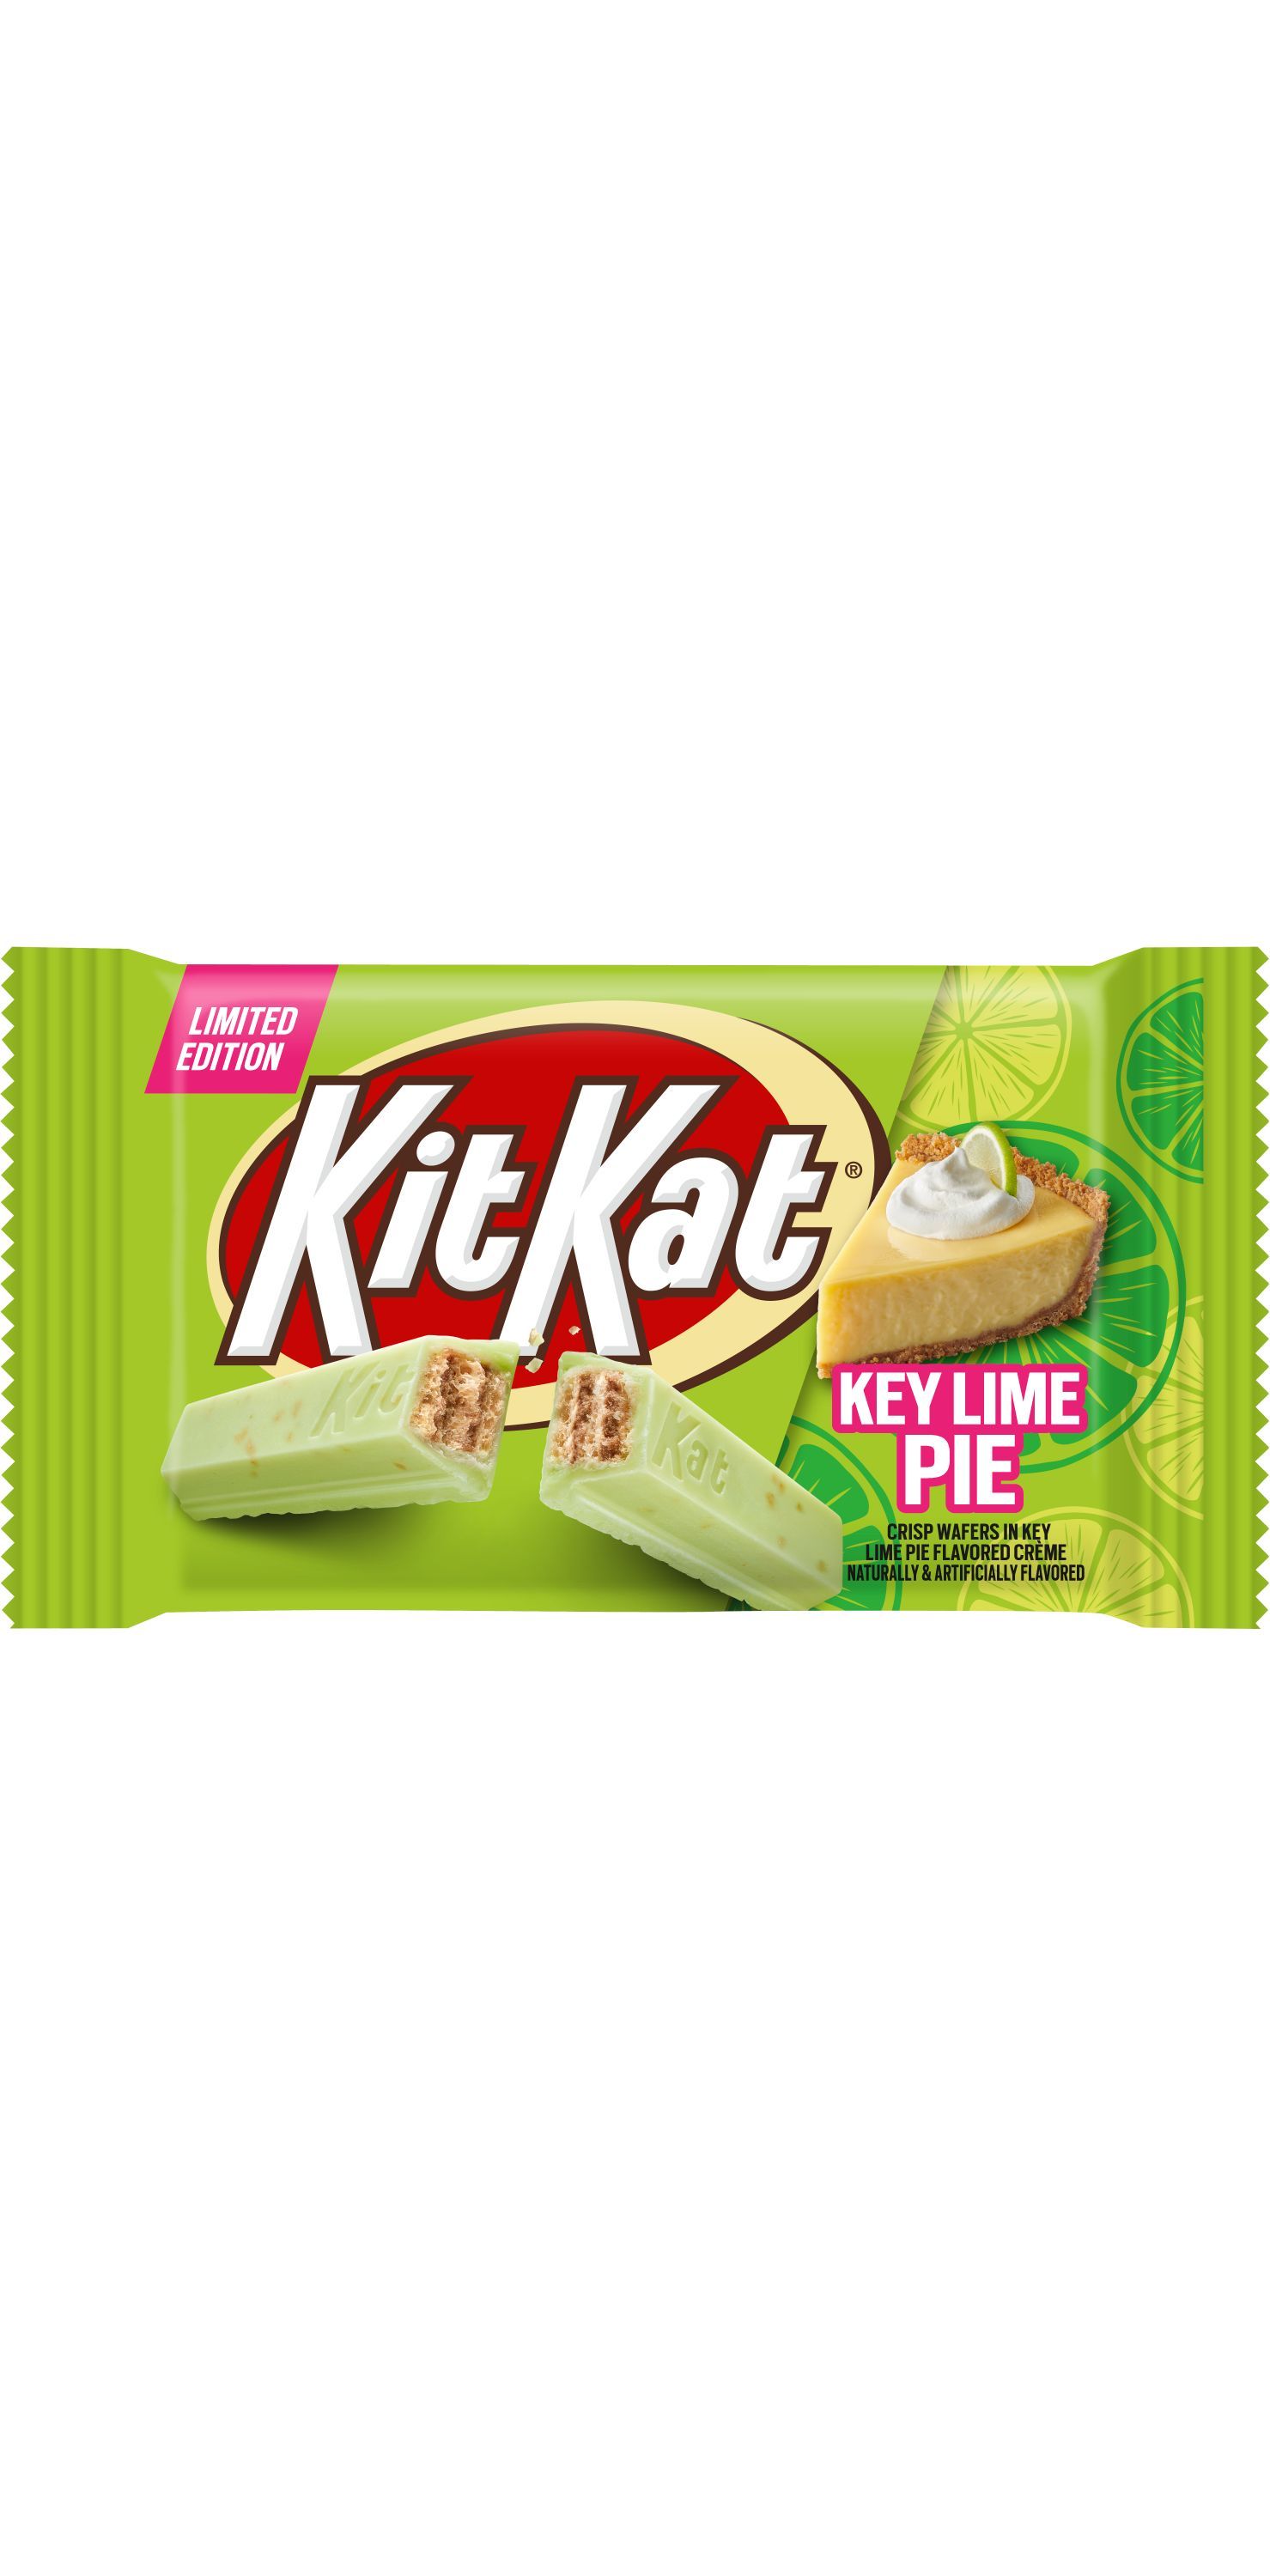 Key Lime Kit Kat Review... | Discuss - Cooking Forums